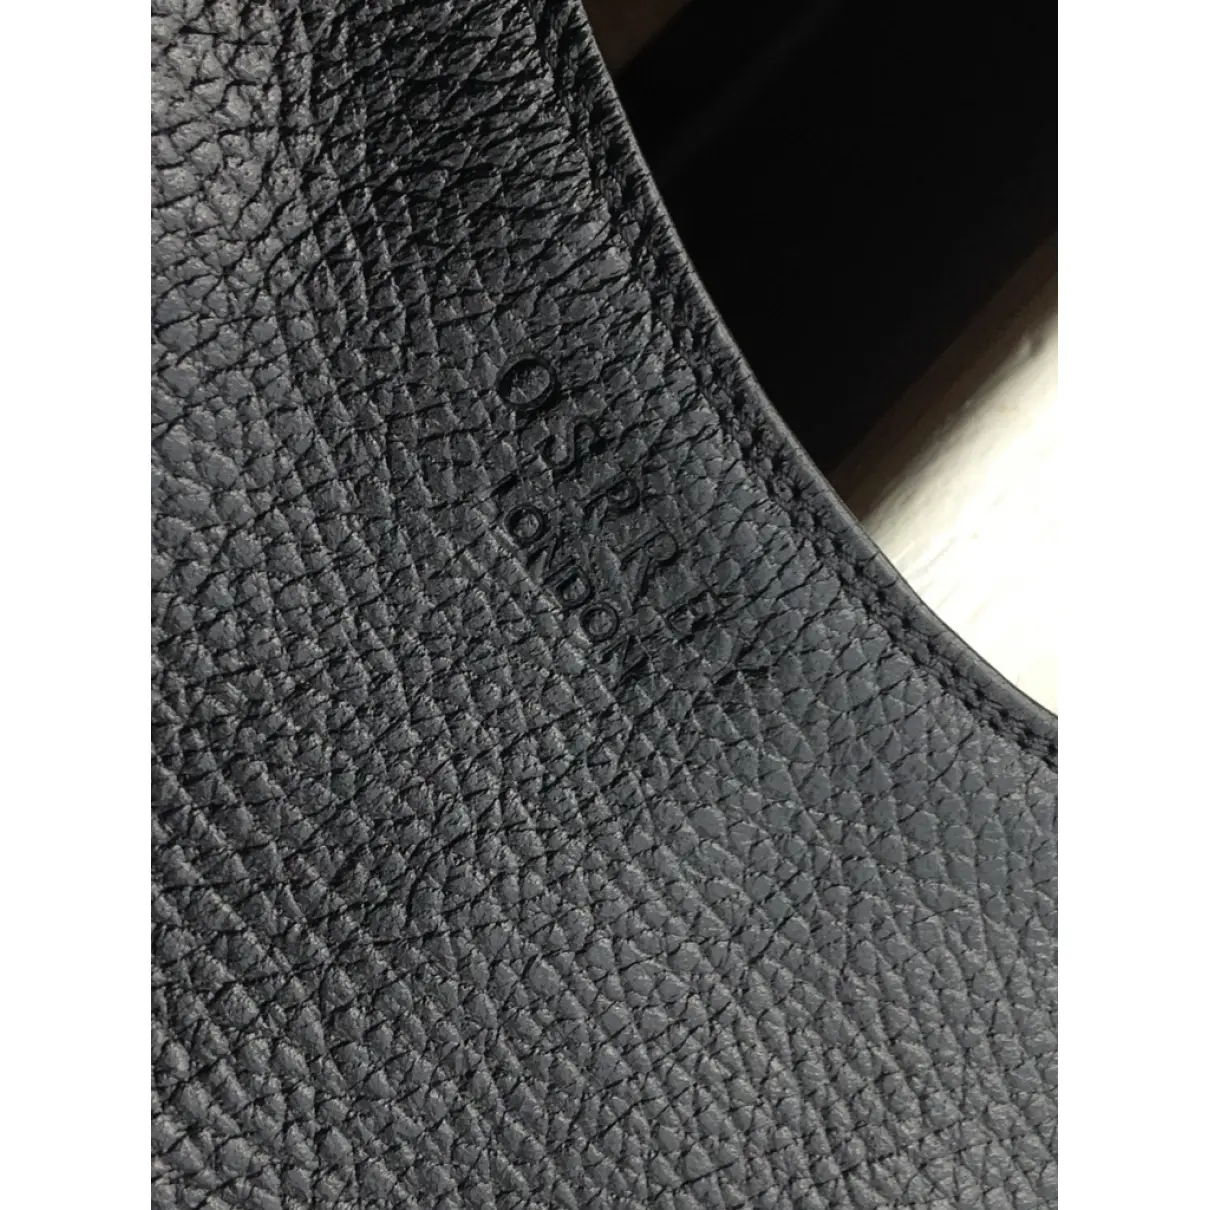 Leather handbag Osprey